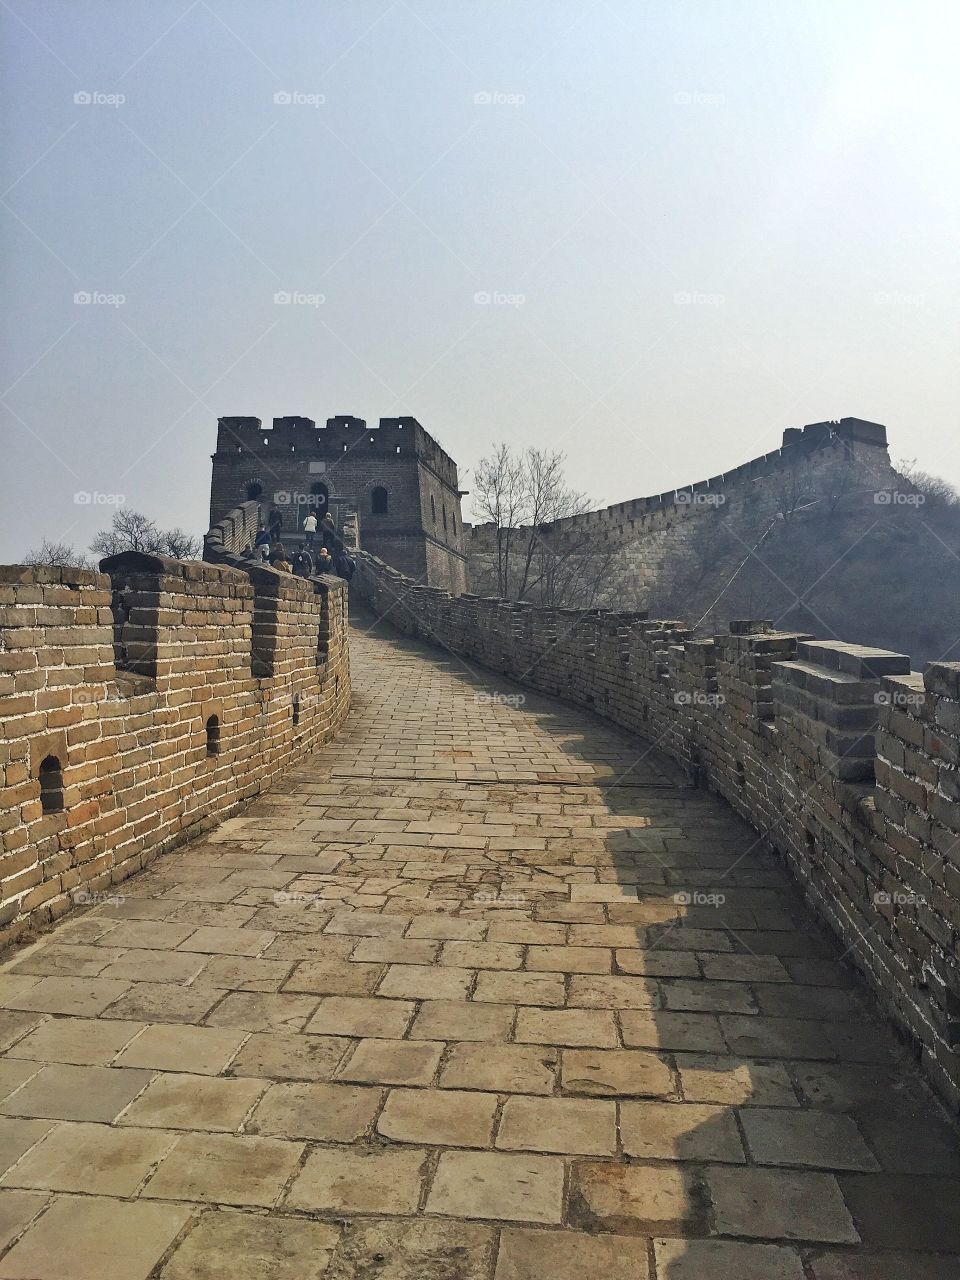 Mutianyu great wall in the beijing province